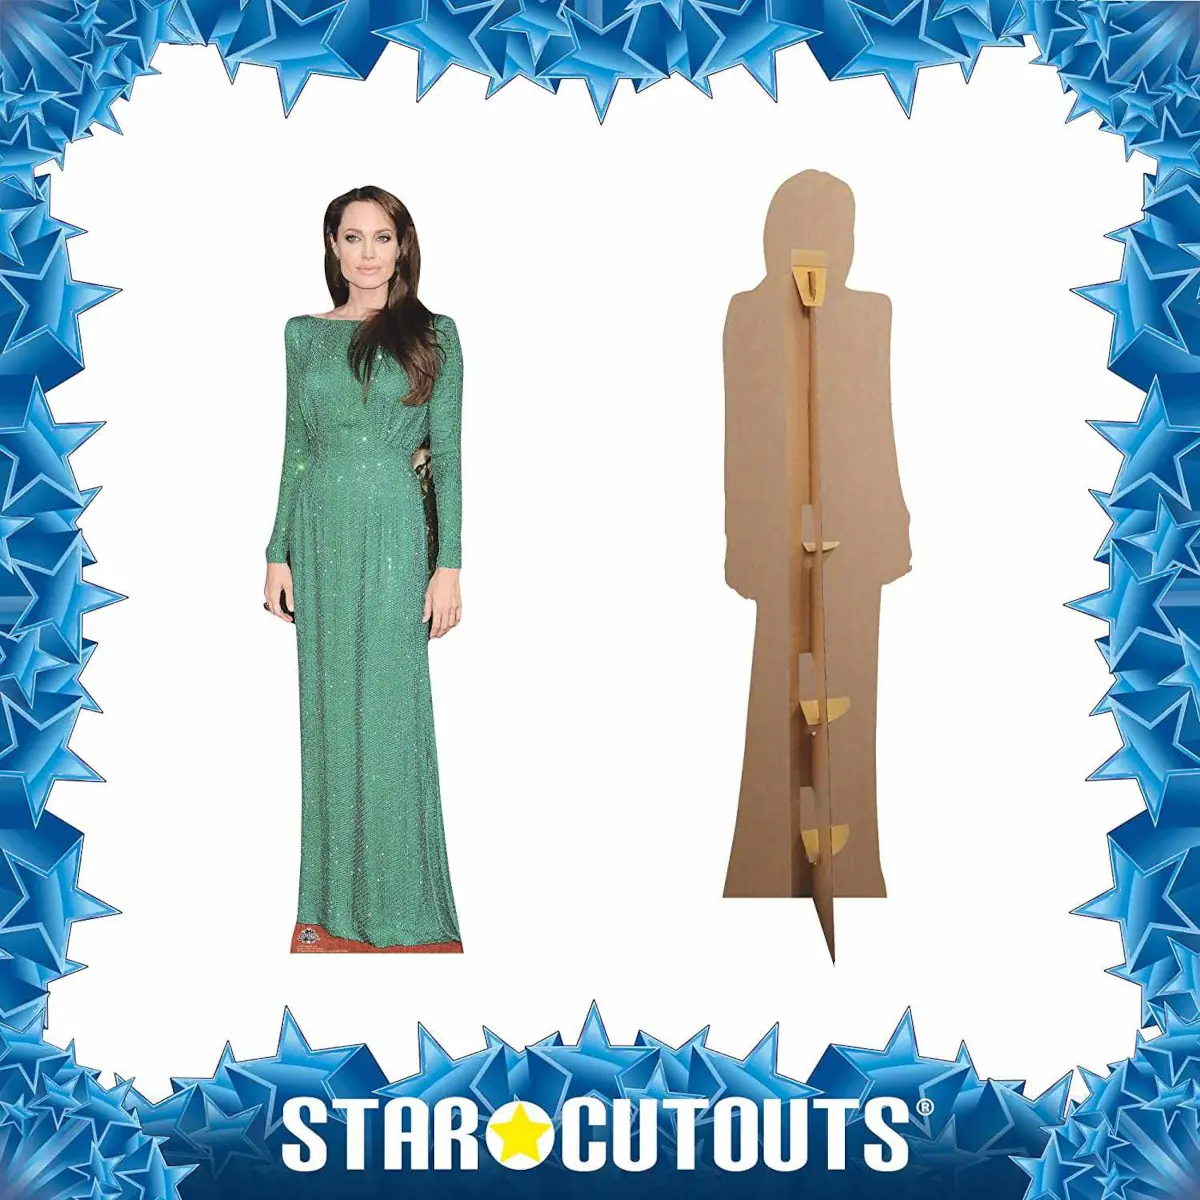 CS441 Angelina Jolie Green Dress American Actress Lifesize Cardboard Cutout Standee 2